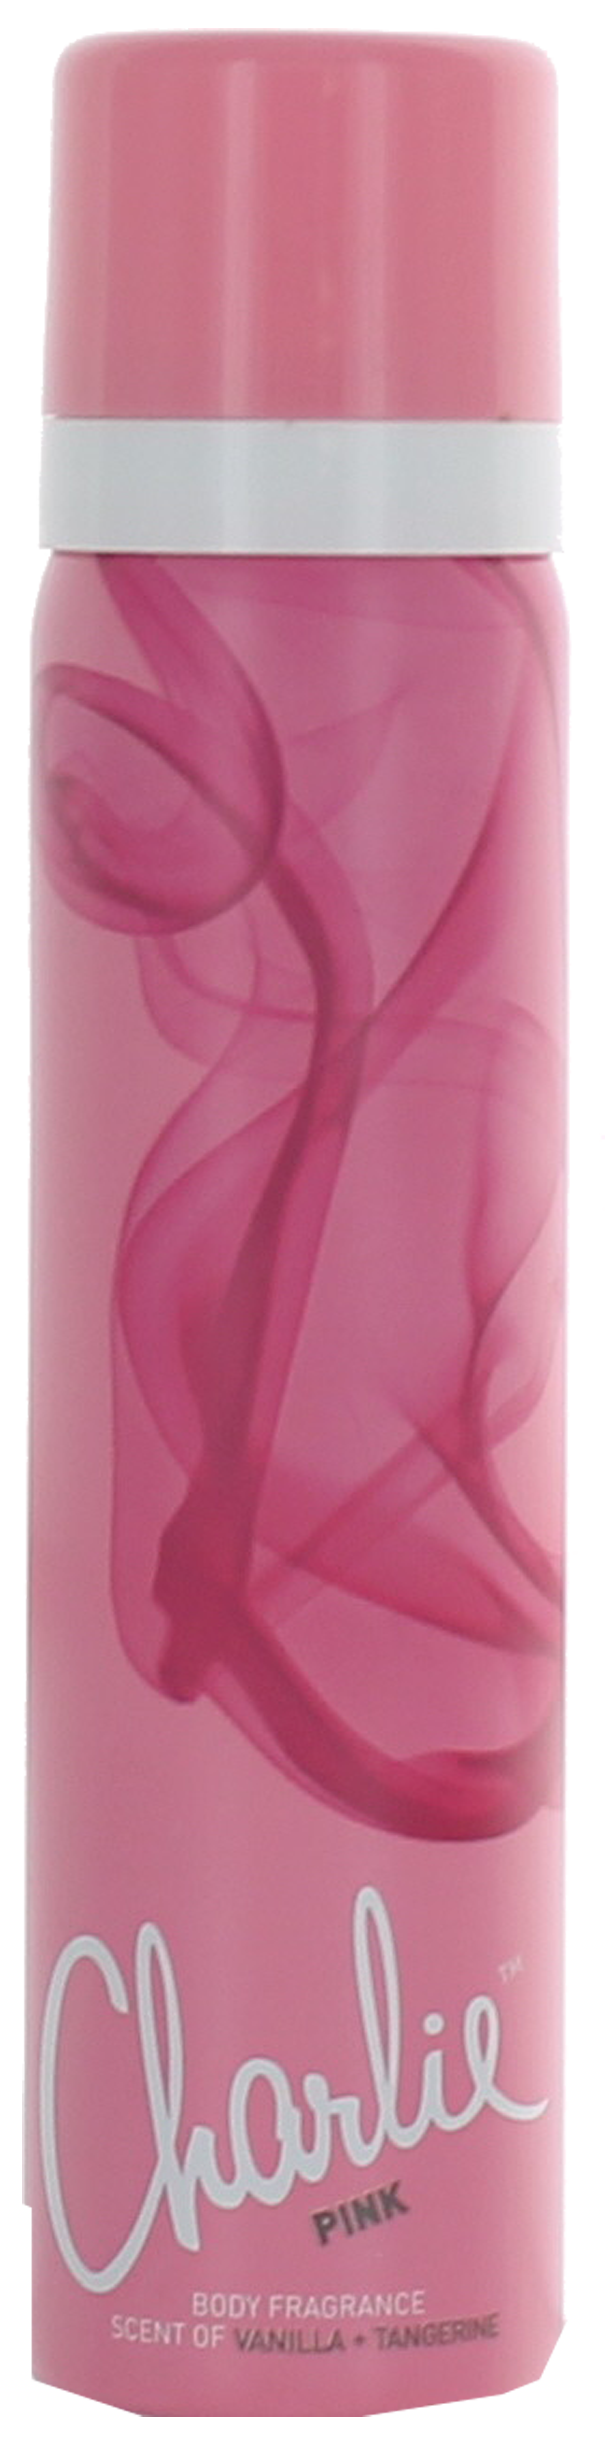 revlon pink (w) body fragance spray 2.5oz